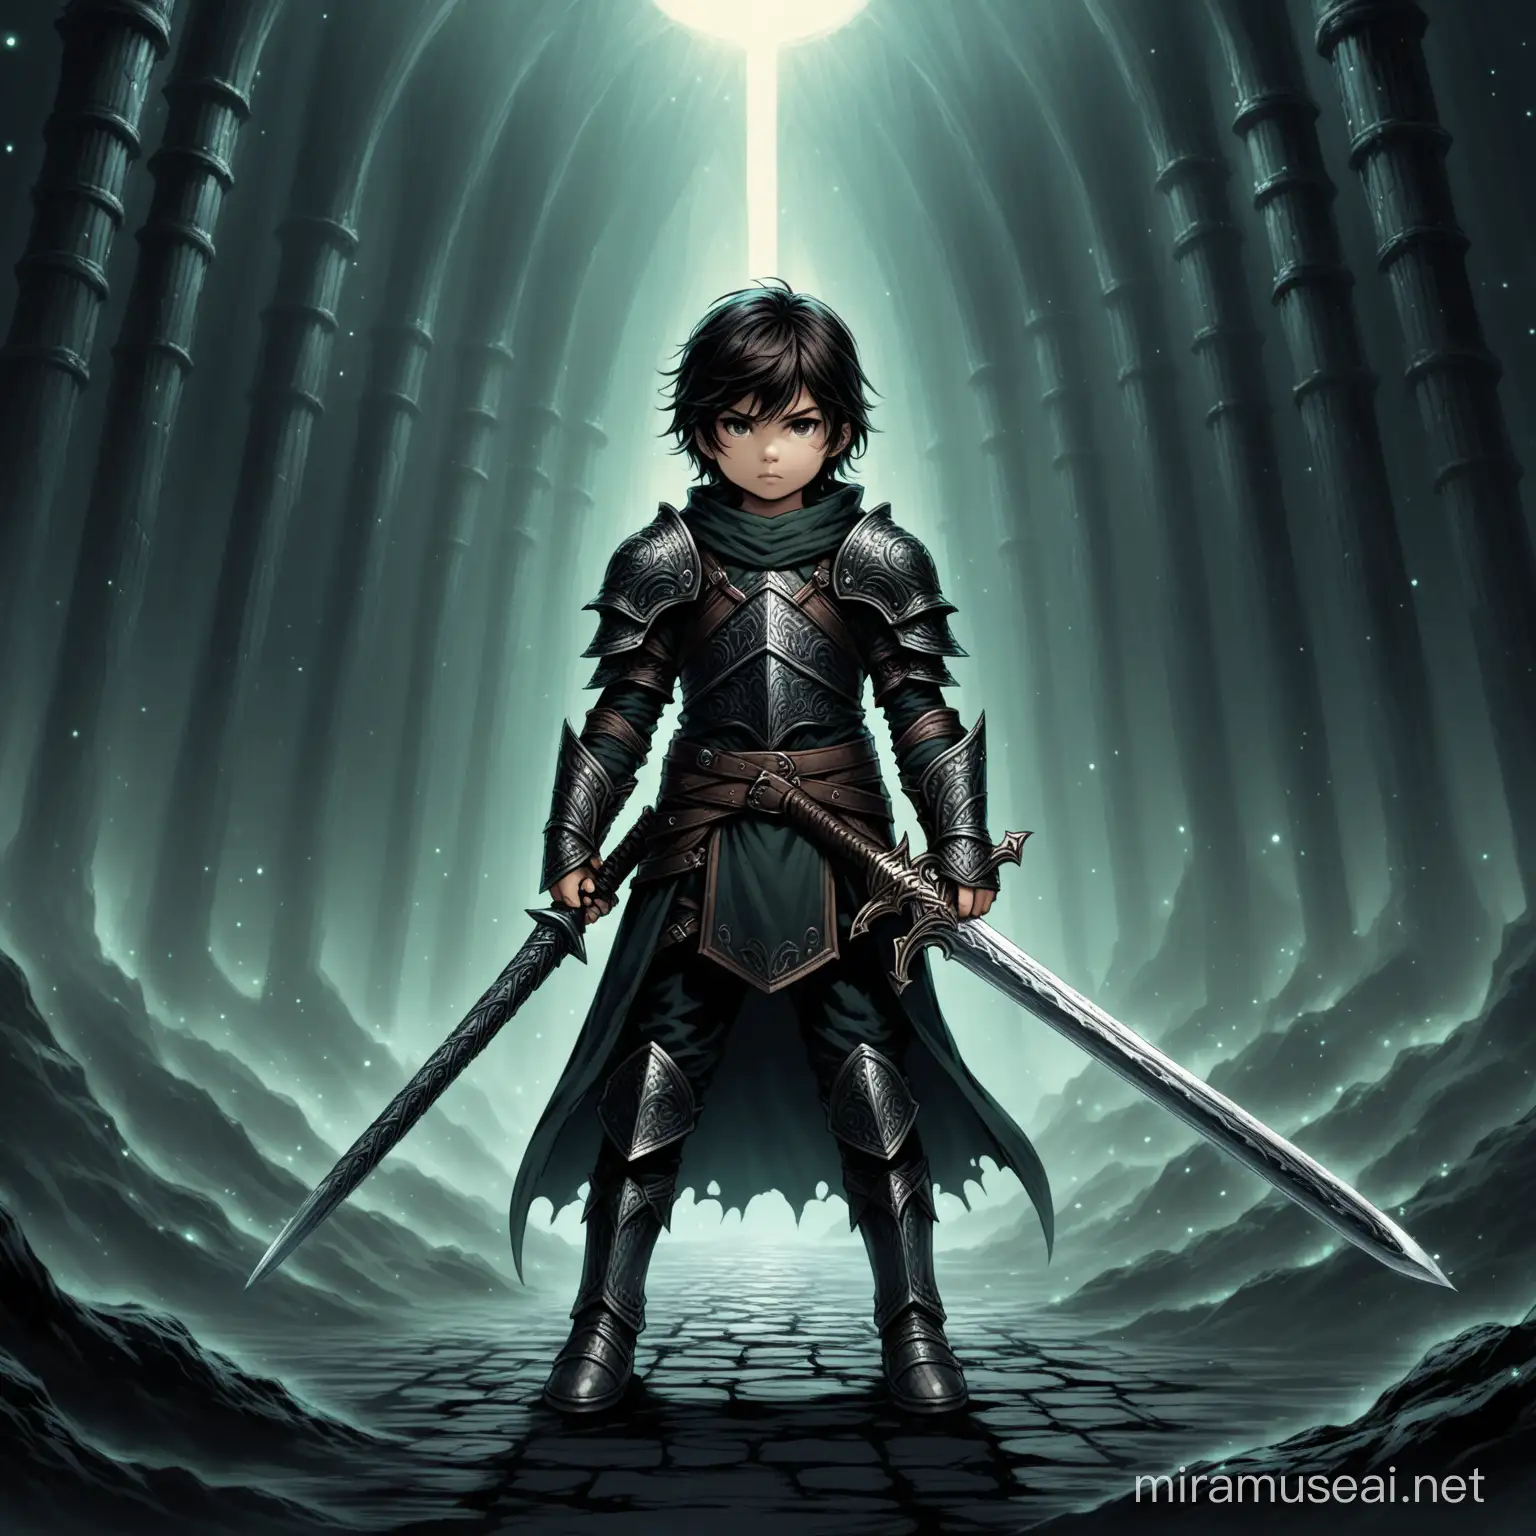 very young dark fantasy warrior with sword in a dark world